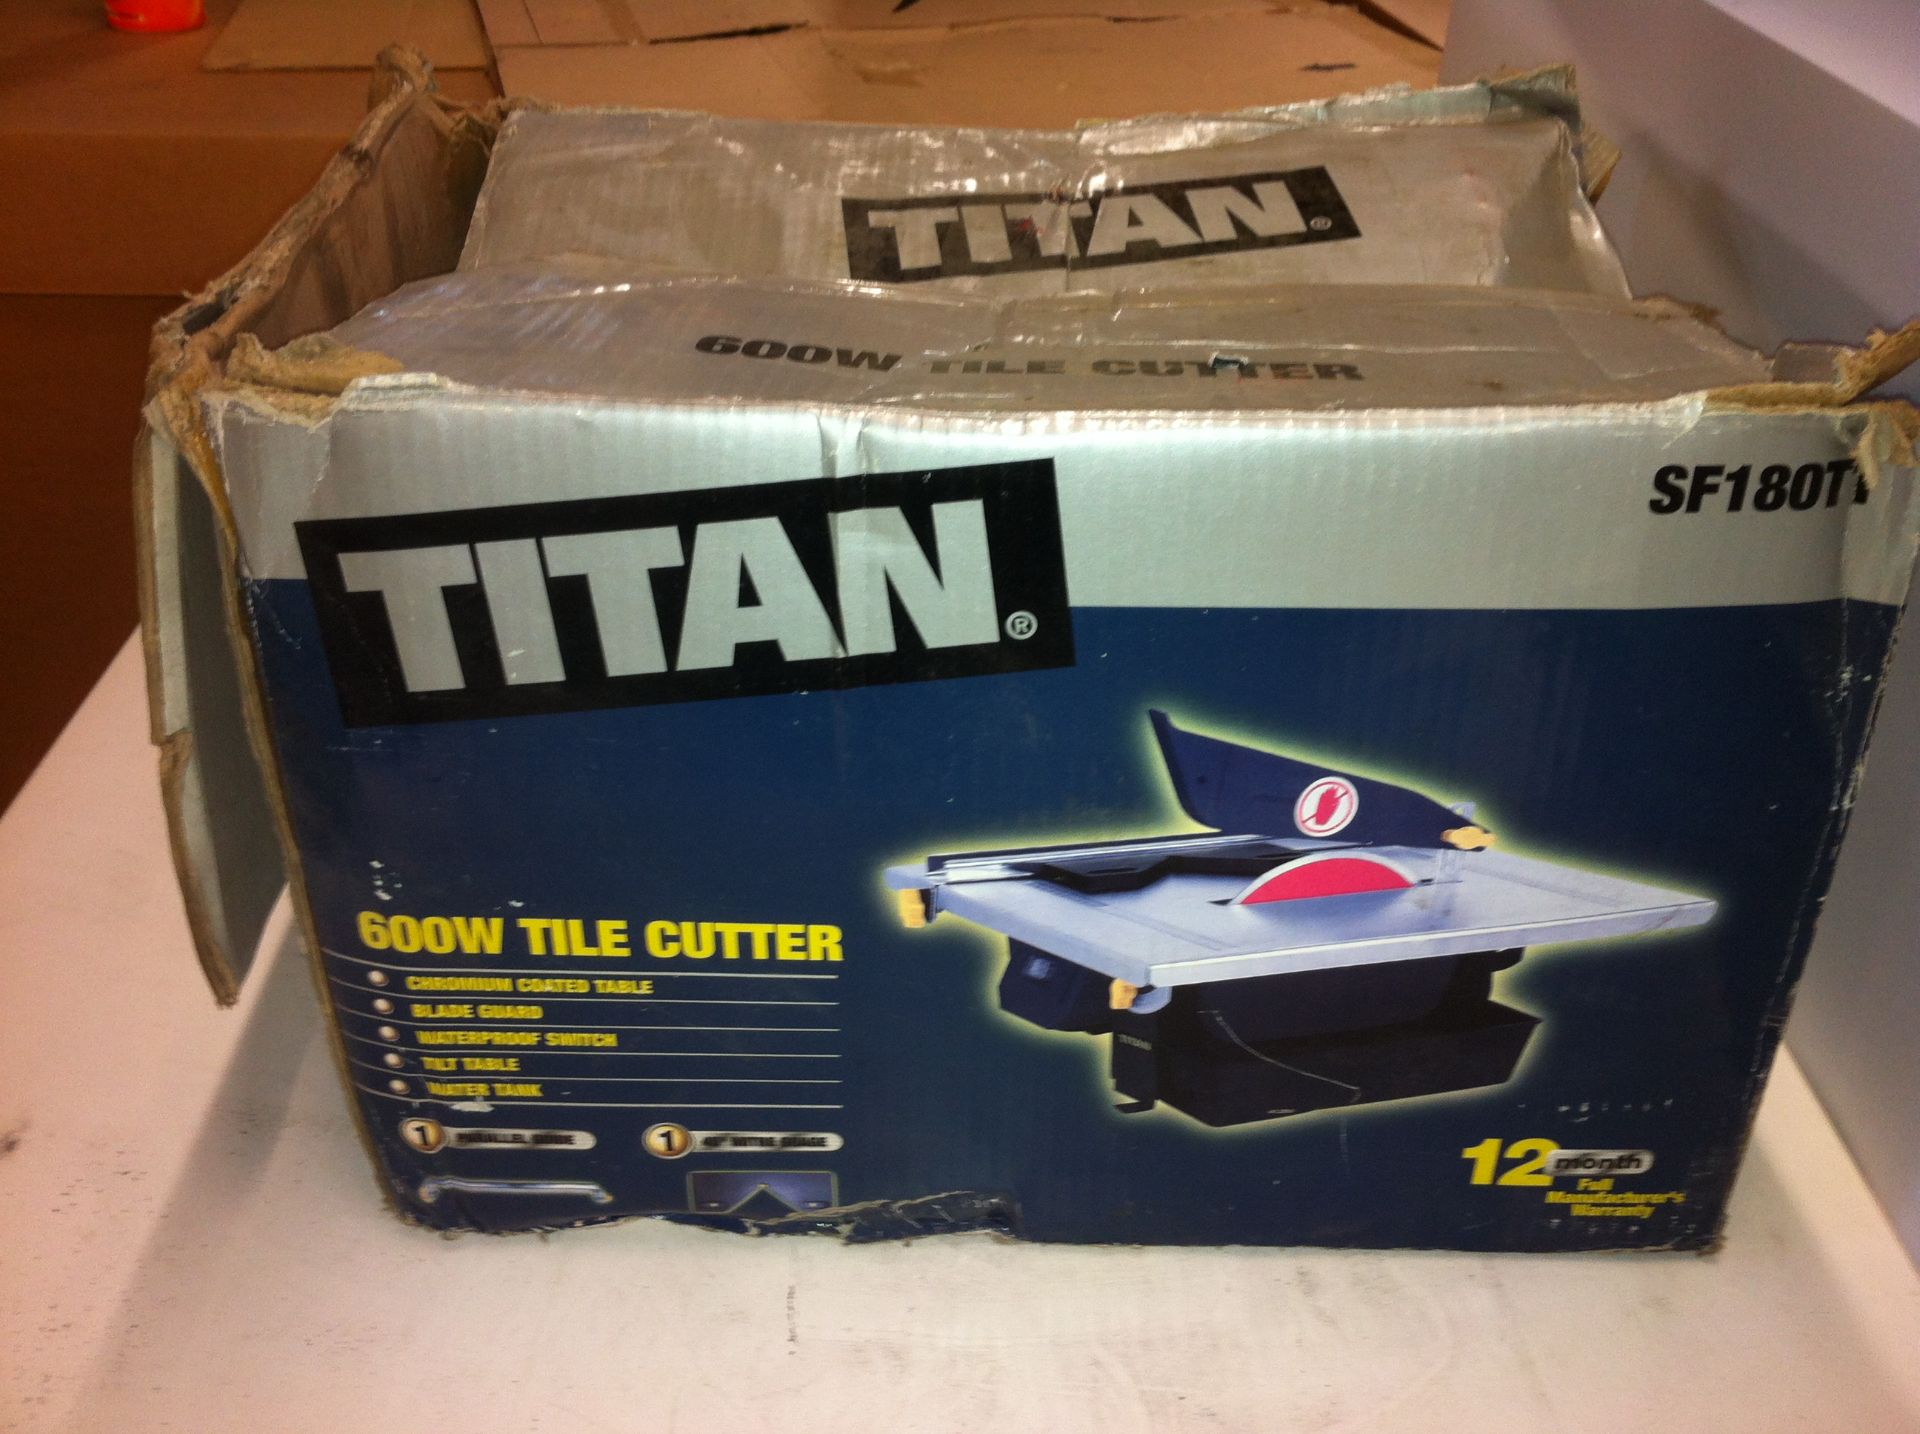 Titan Tile Cutter